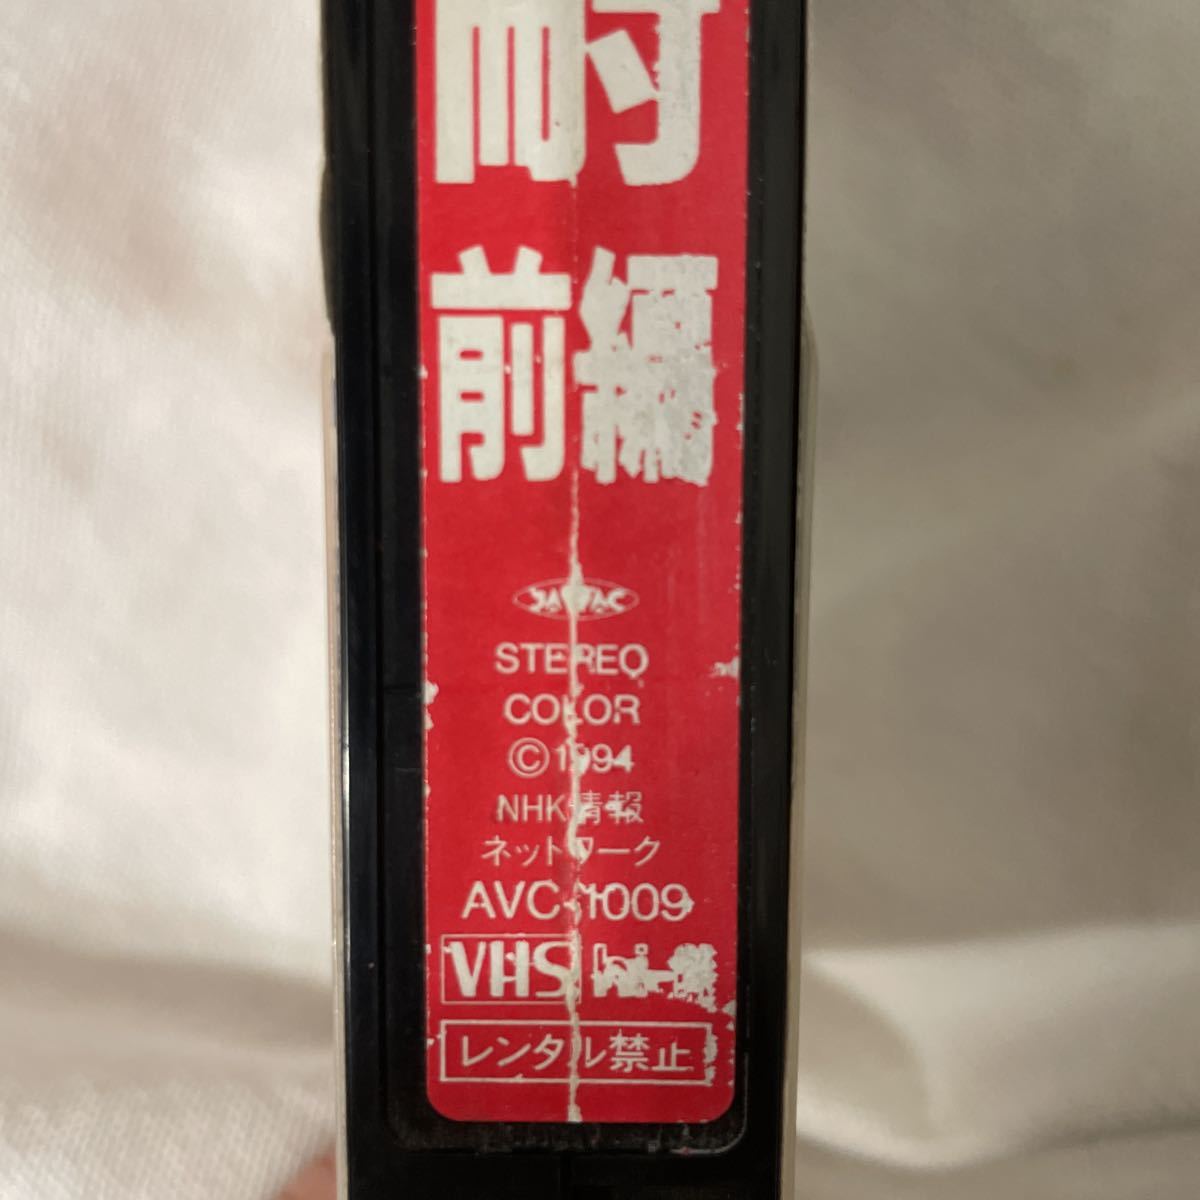 VHS[\'94 Suzuka 8 hours передний сборник ] Toshiba EMI( АО ) Suzuka circuit load гонки мотоцикл 